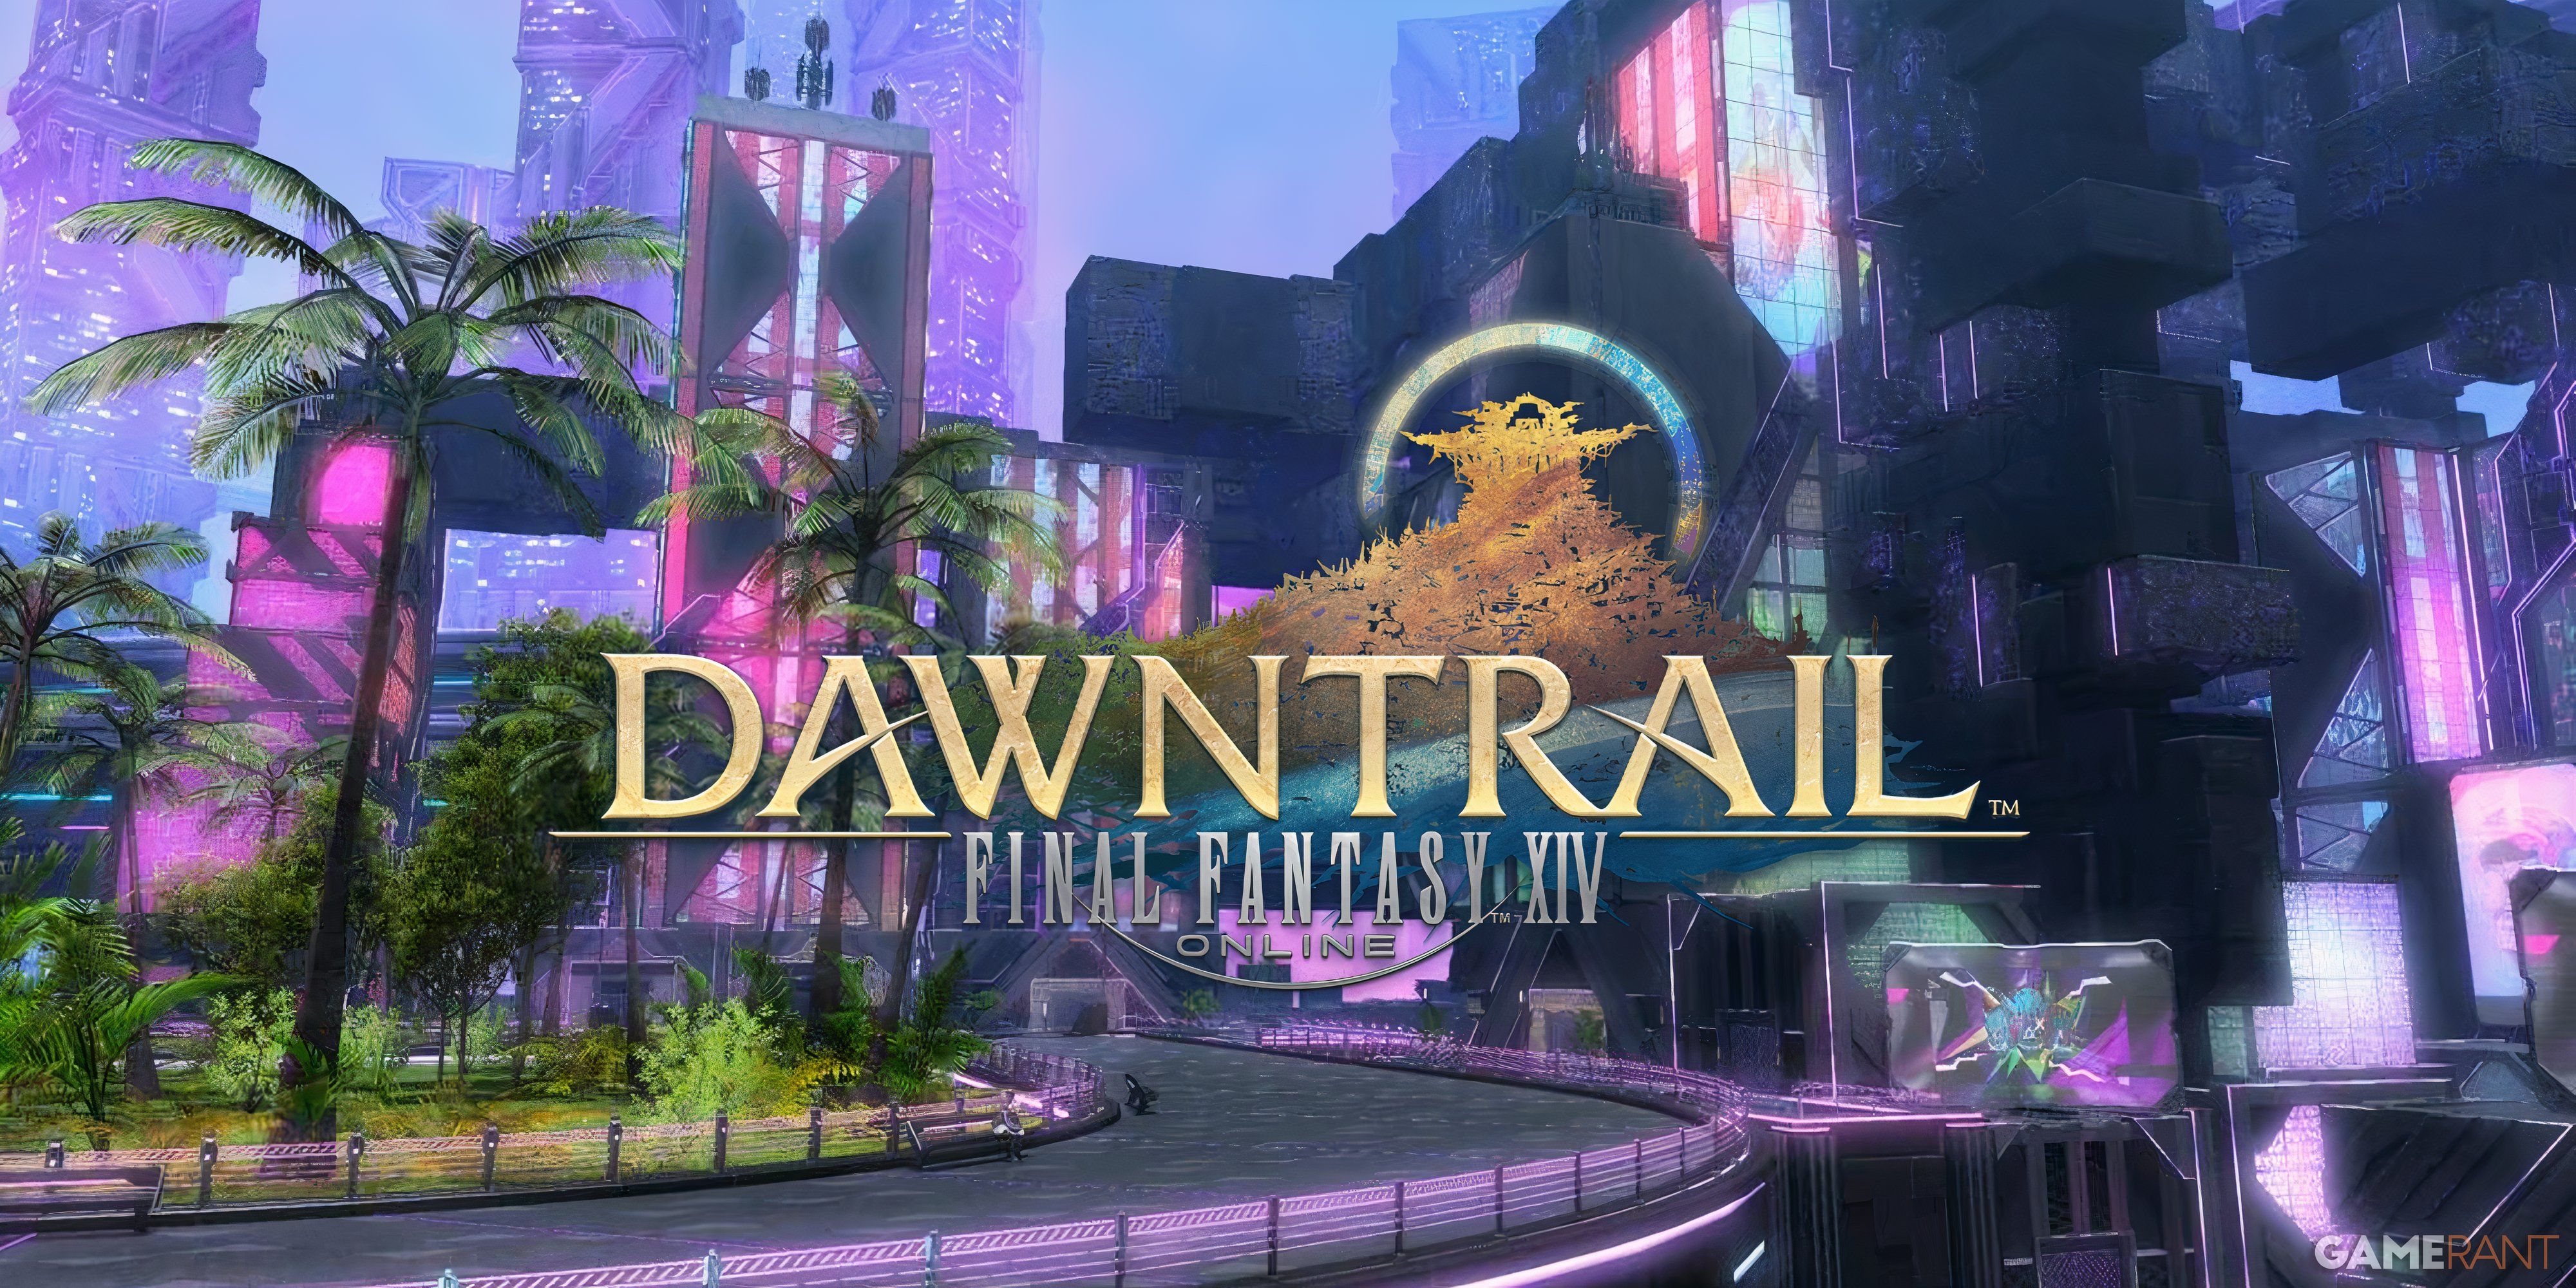 Final Fantasy 14 city with dawntrail logo on it